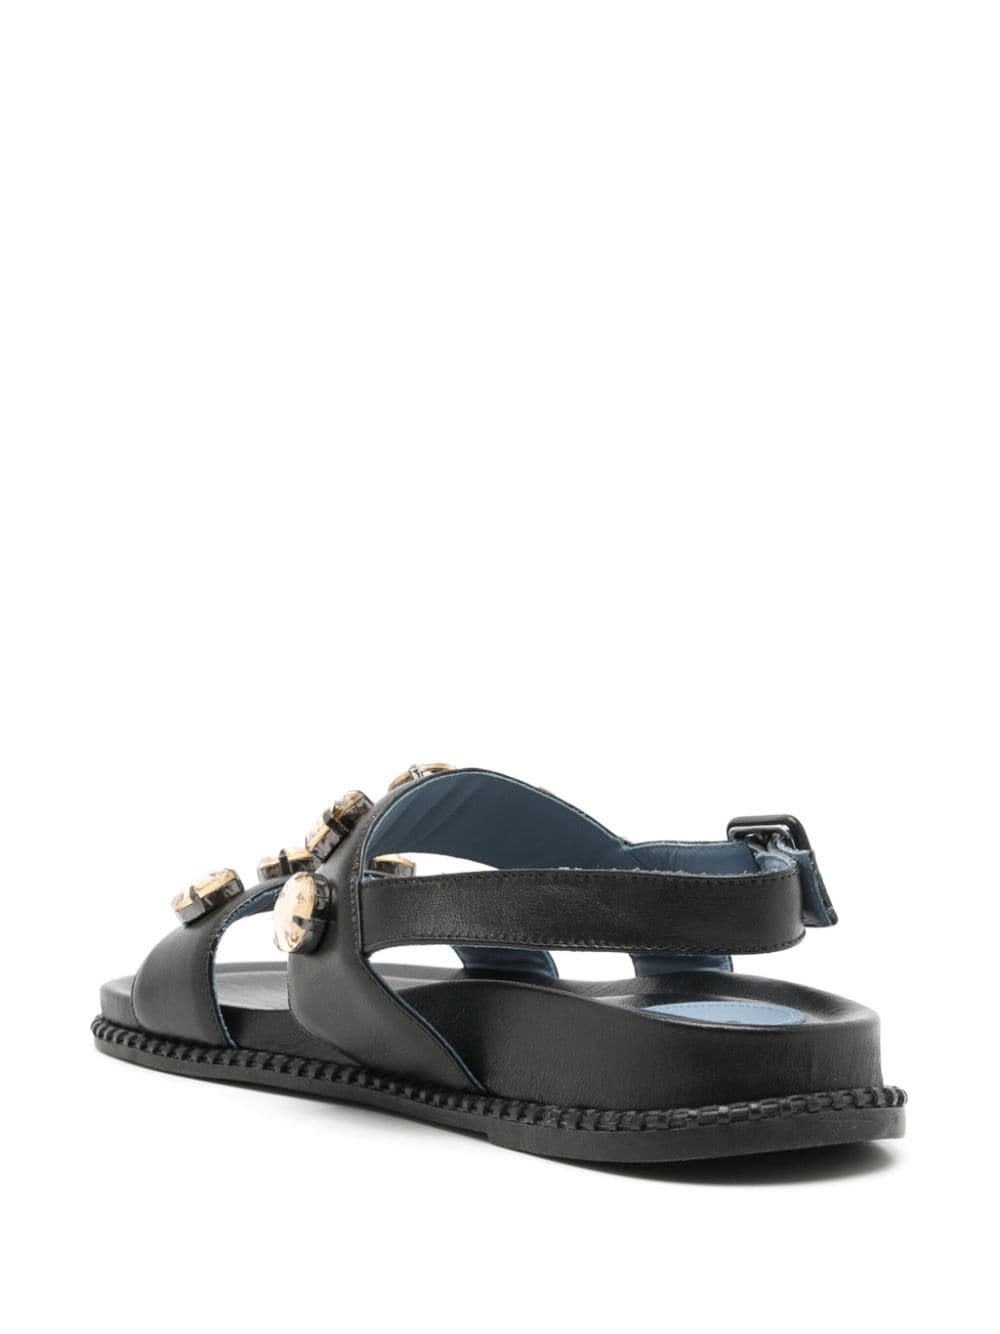 Blue Bird Shoes Catarina crystal-embellished leather sandals Black